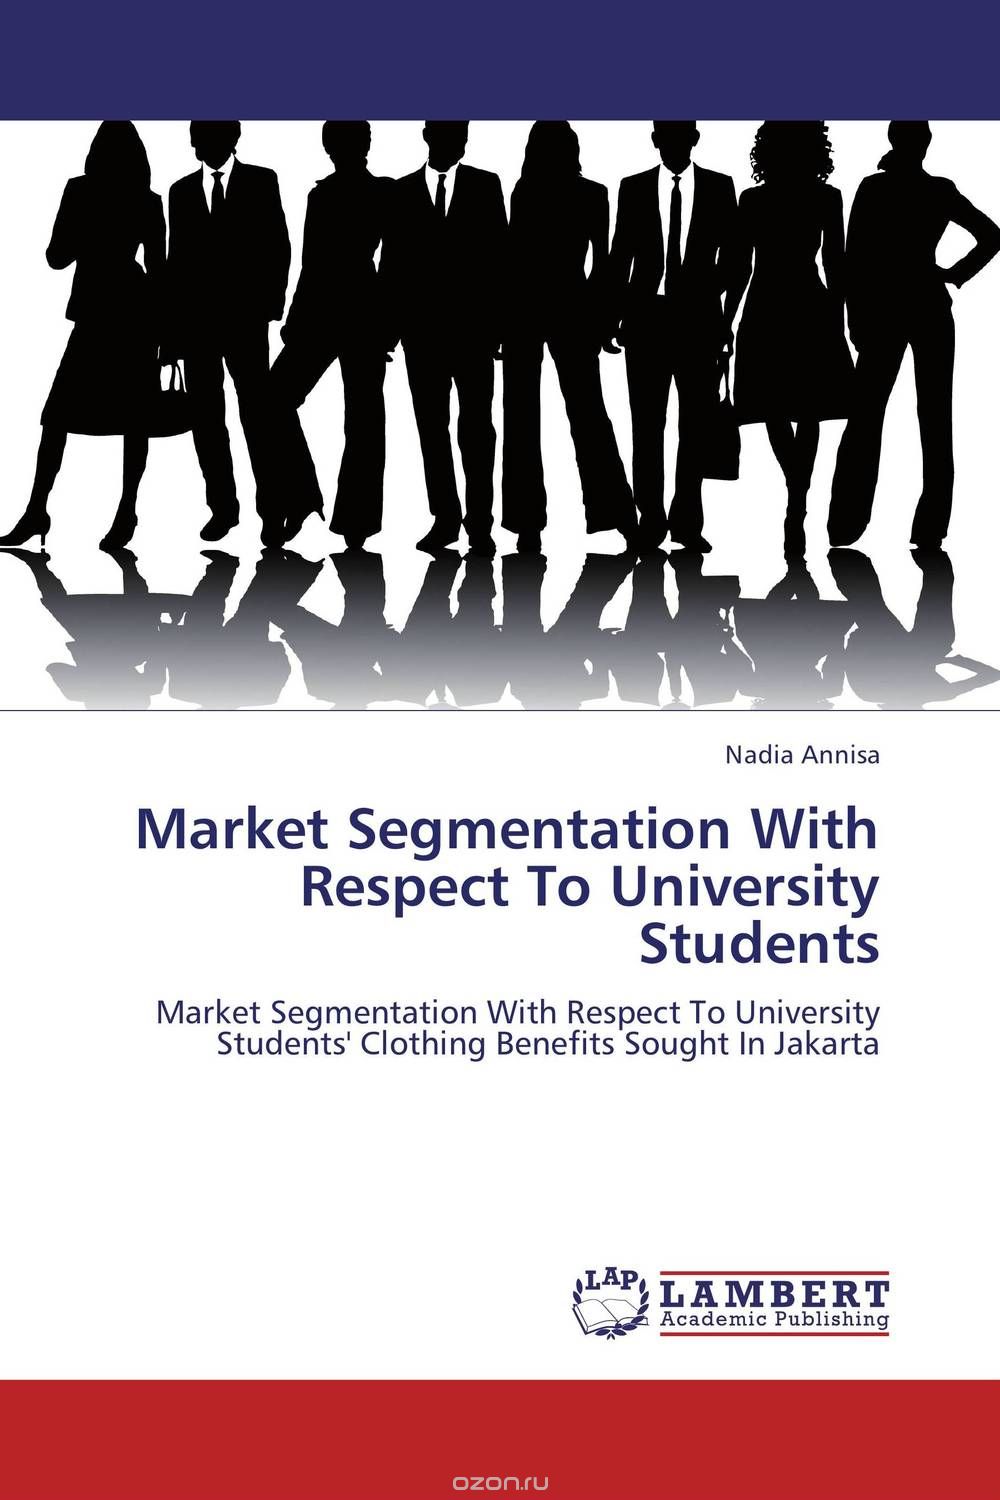 Скачать книгу "Market Segmentation With Respect To University Students"